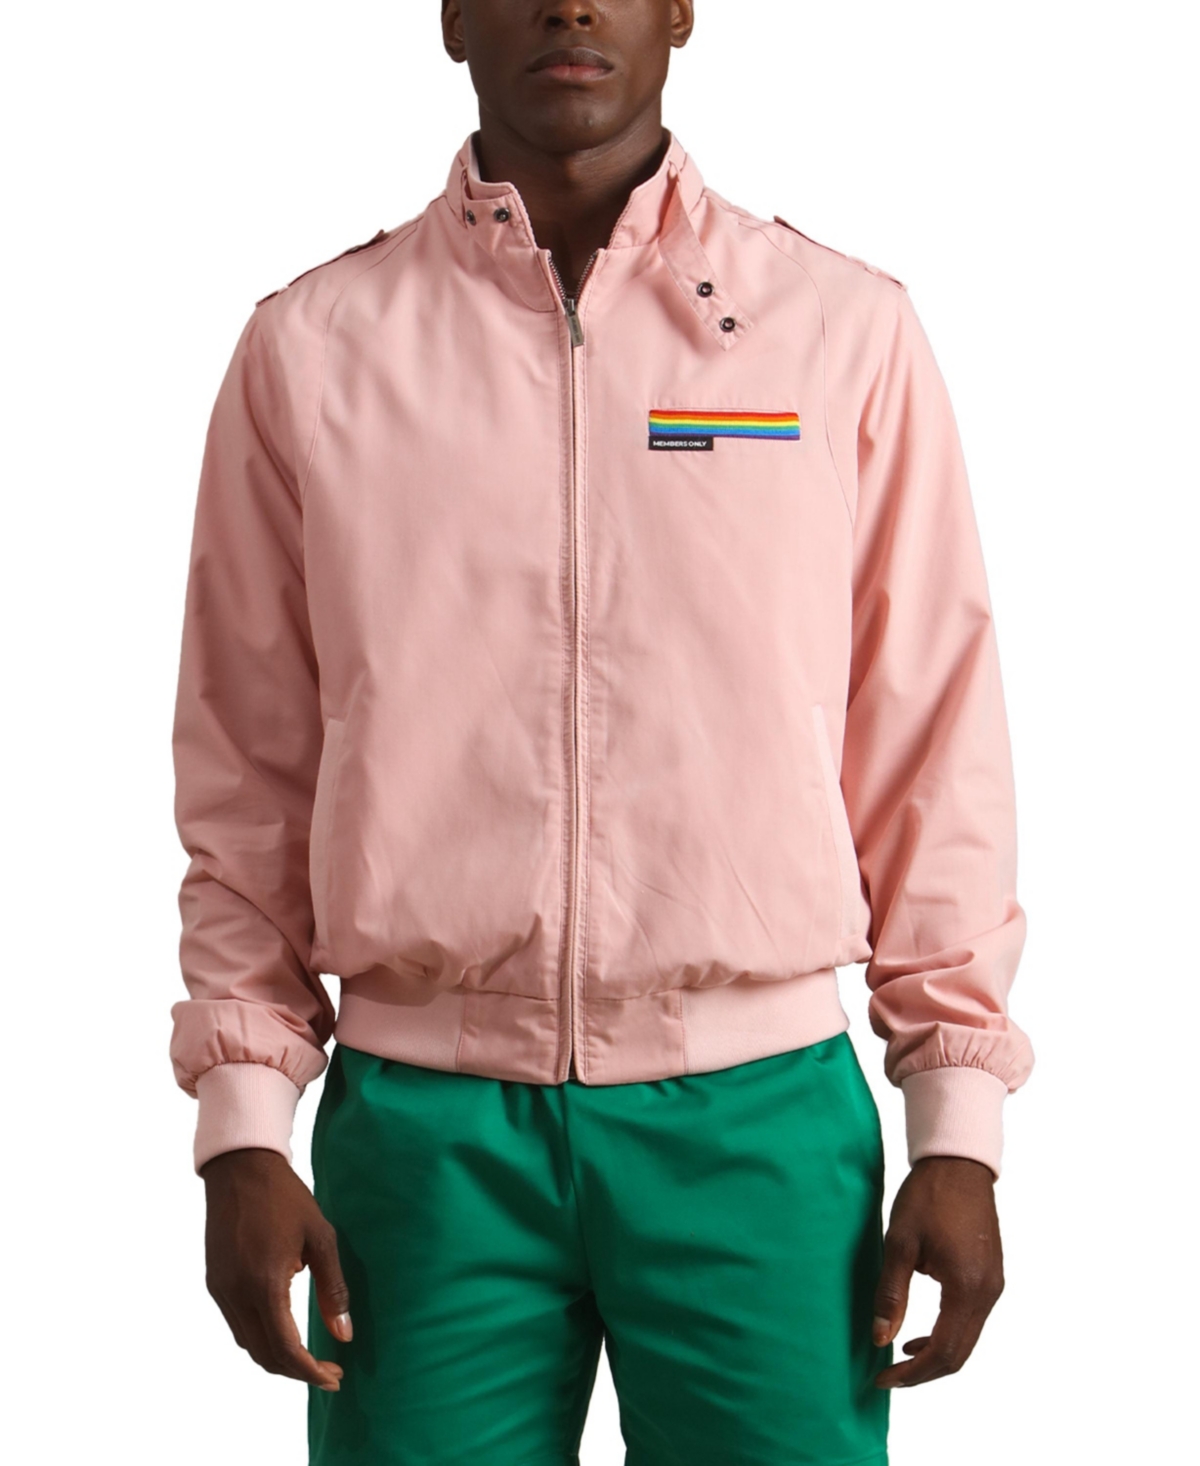 Men's Classic Iconic Racer Pride Jacket - Light pink